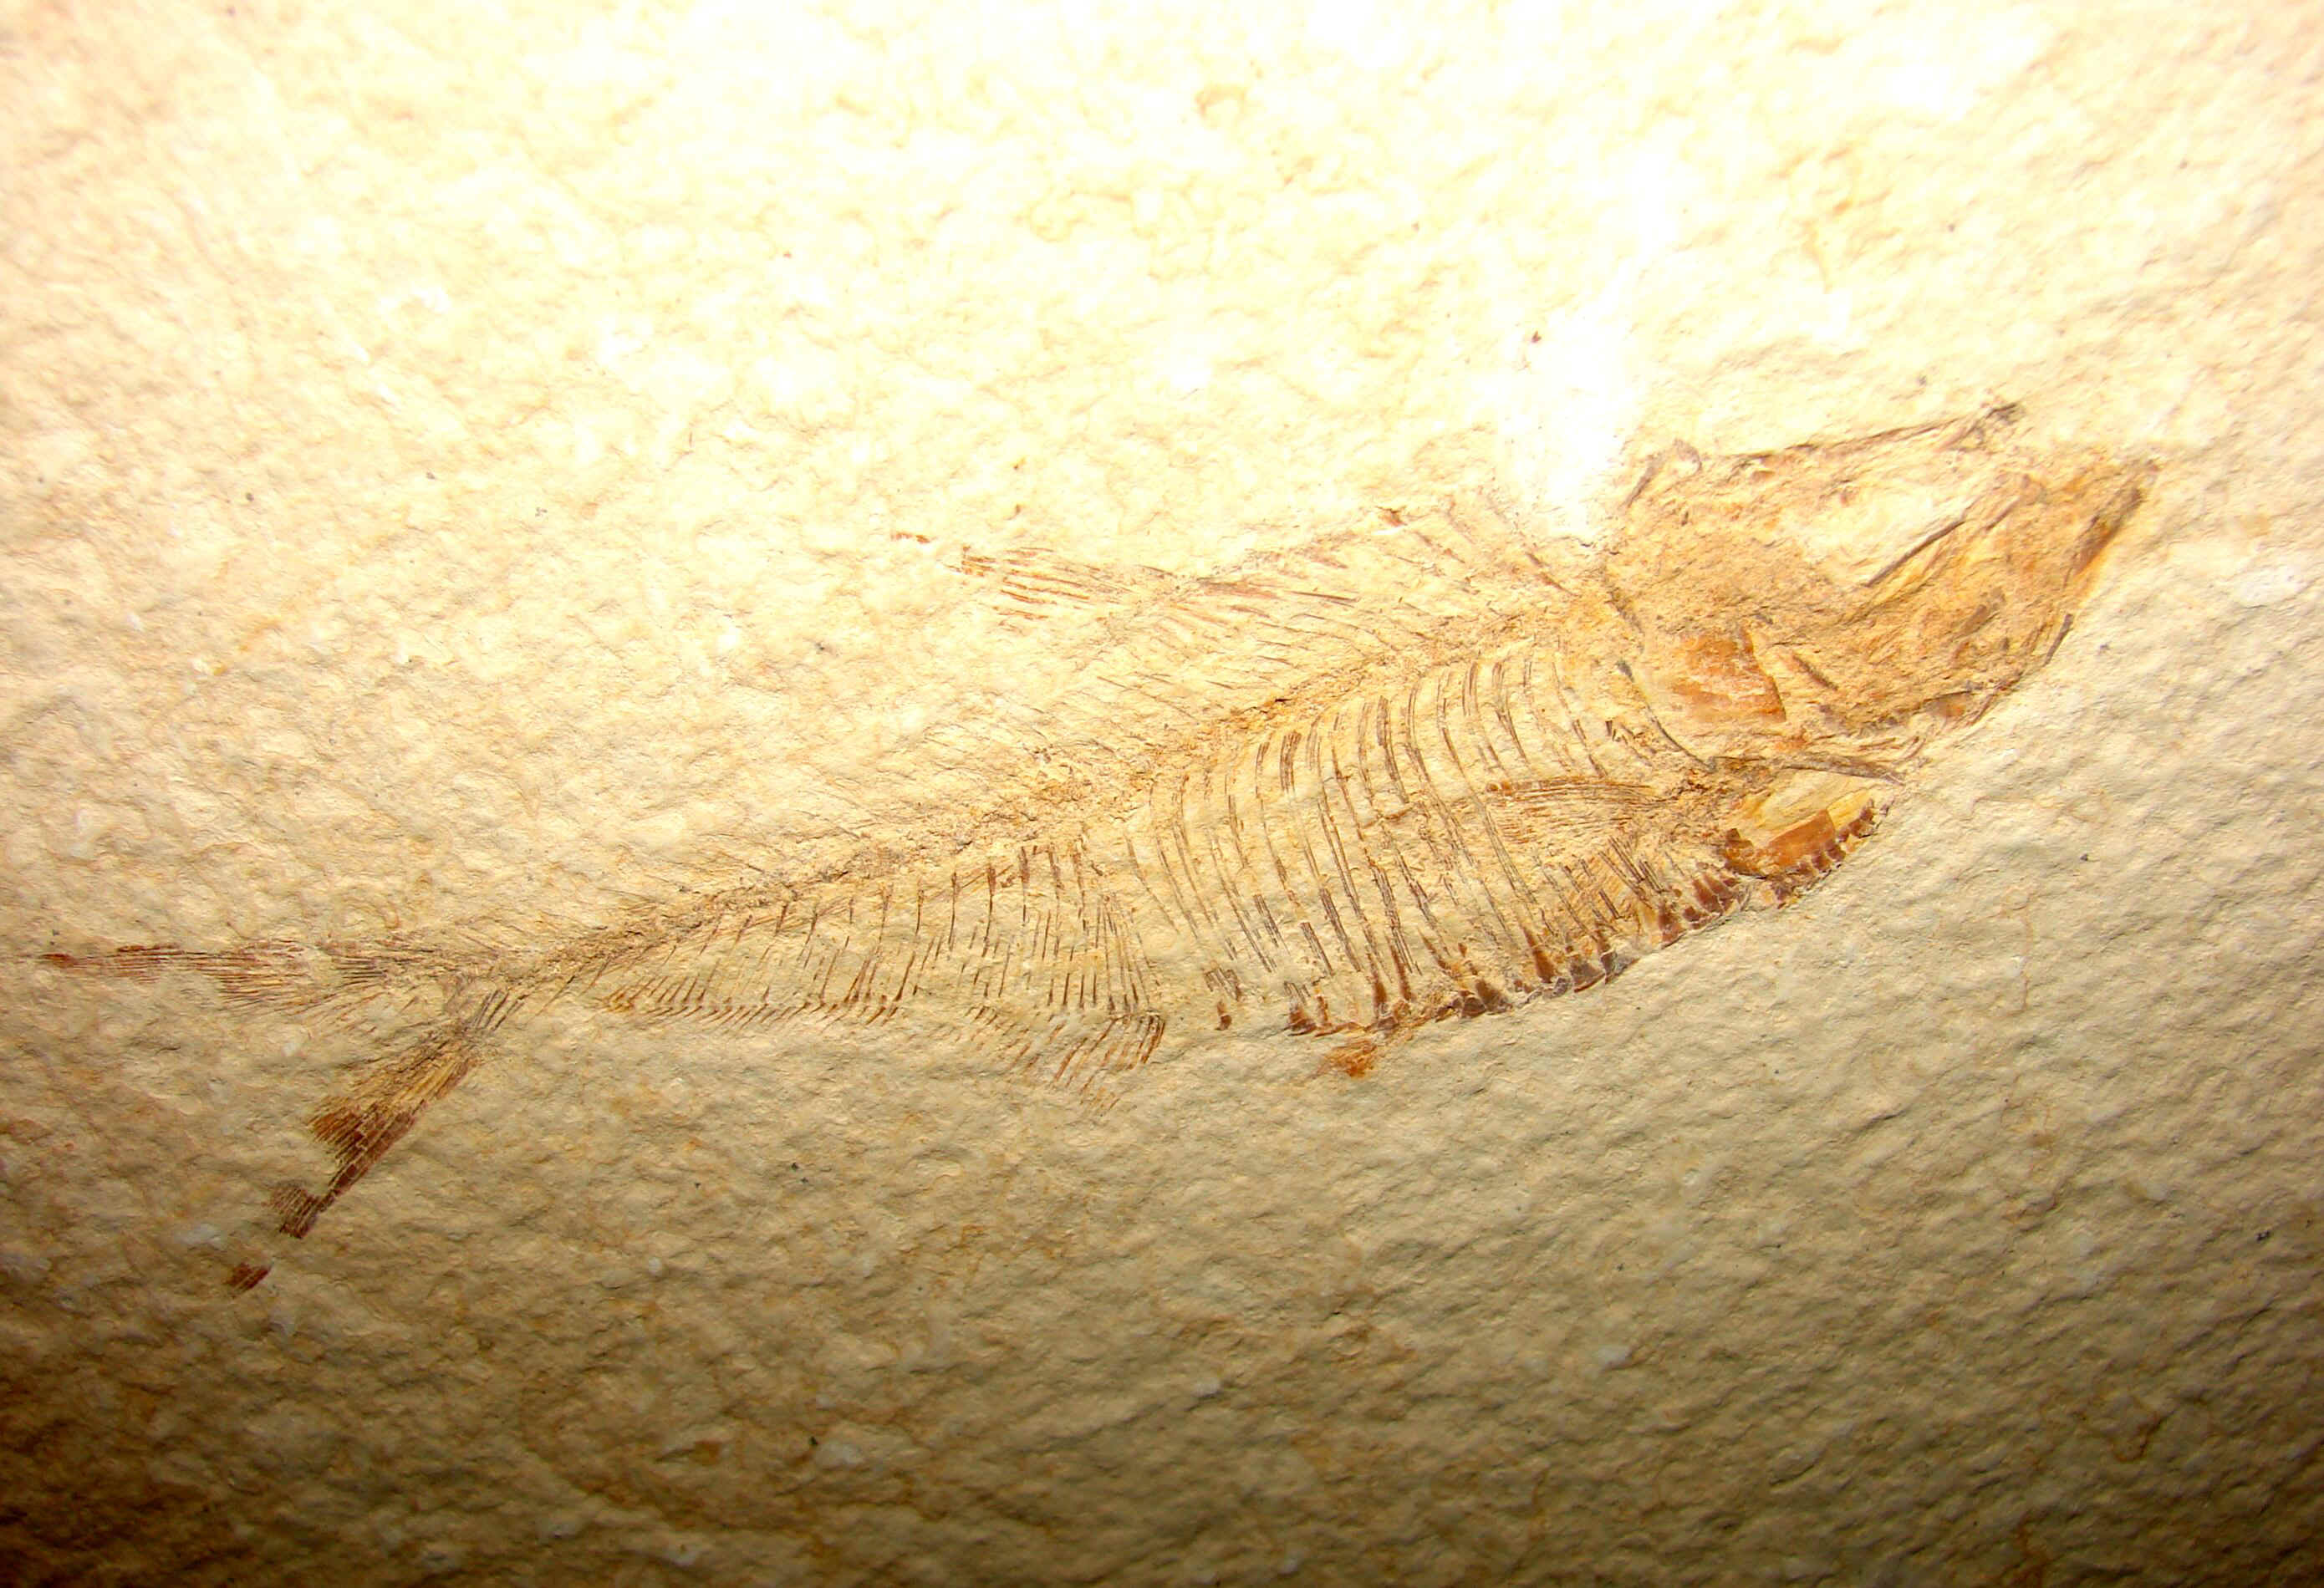 http://www.artfromgod.com/fossilfish-23.jpg (807370 bytes)